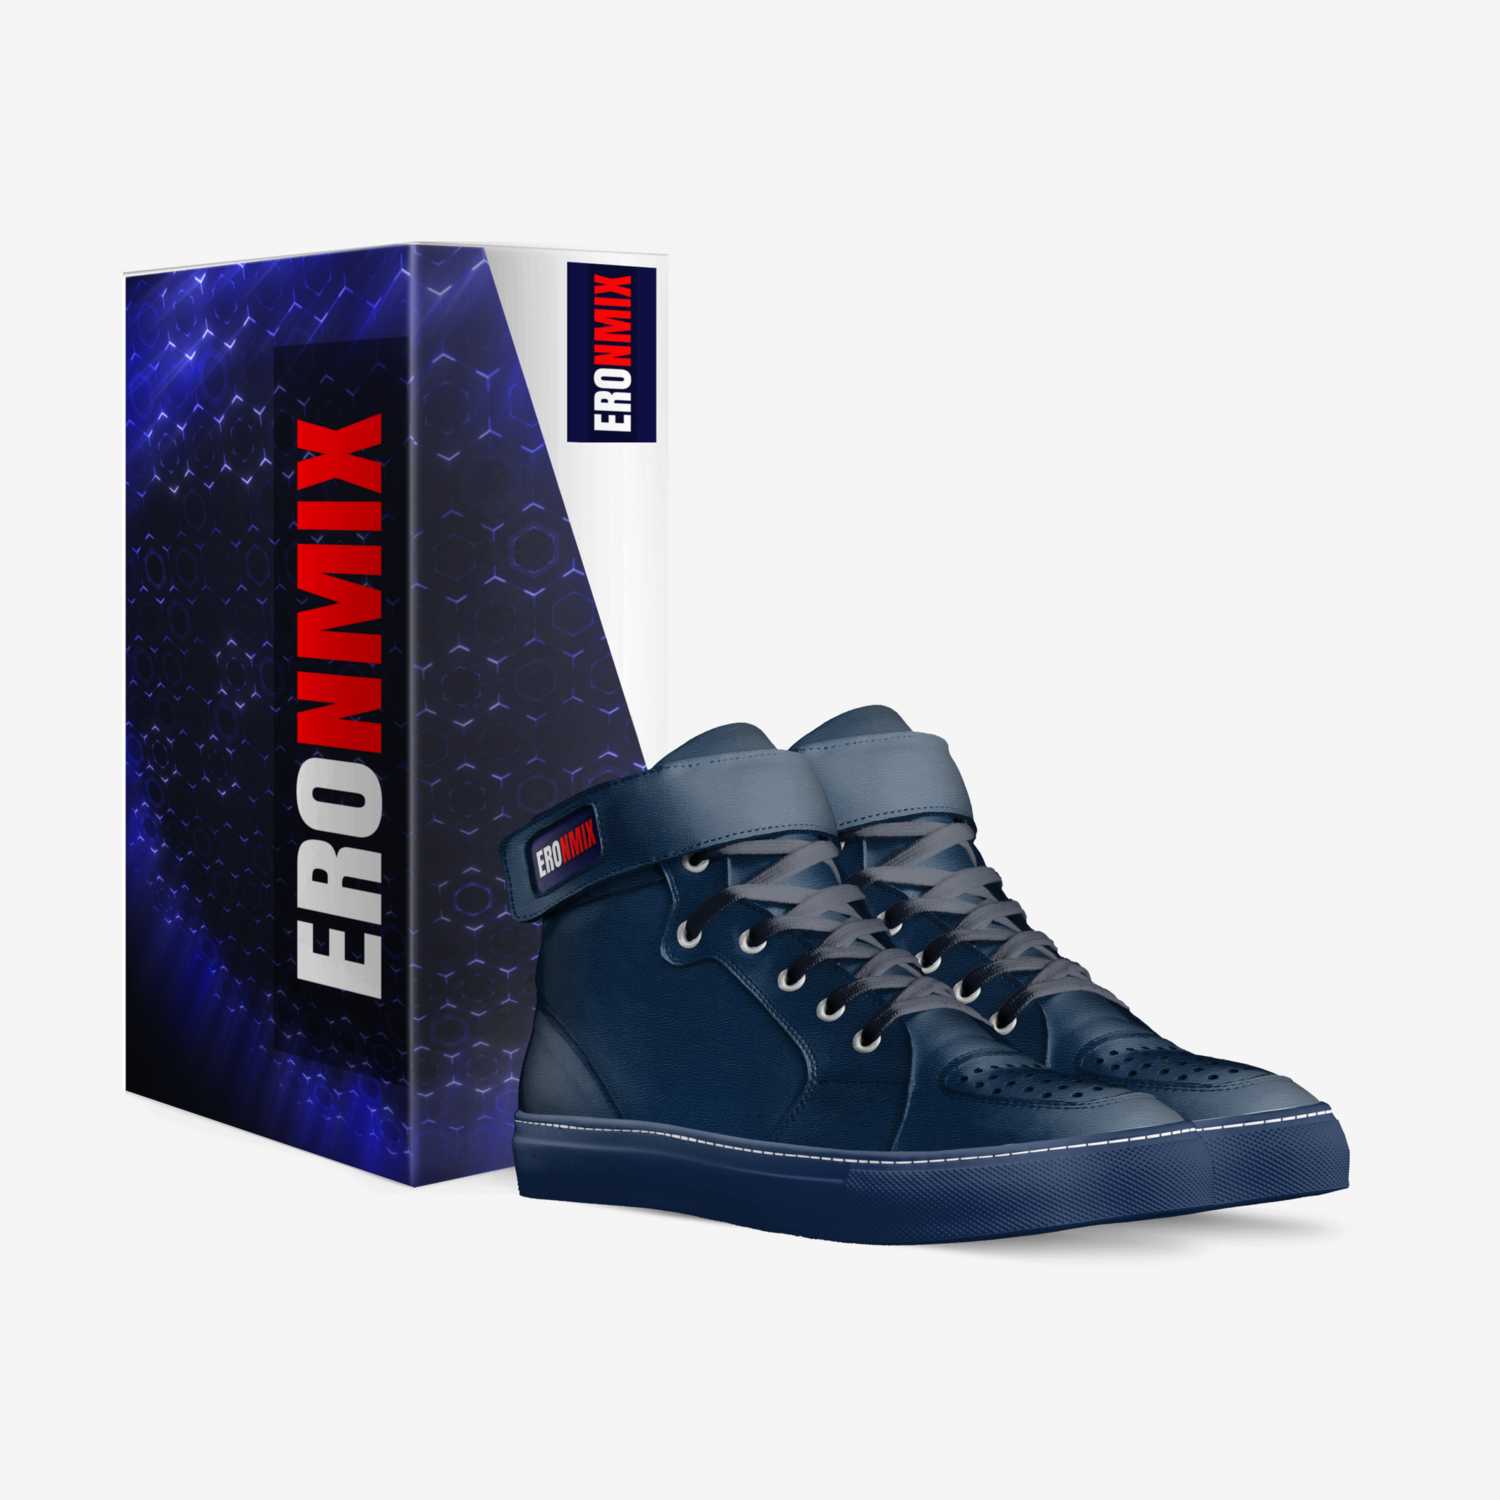 Eronmix Field-Flex custom made in Italy shoes by Eduardo Ramirez | Box view